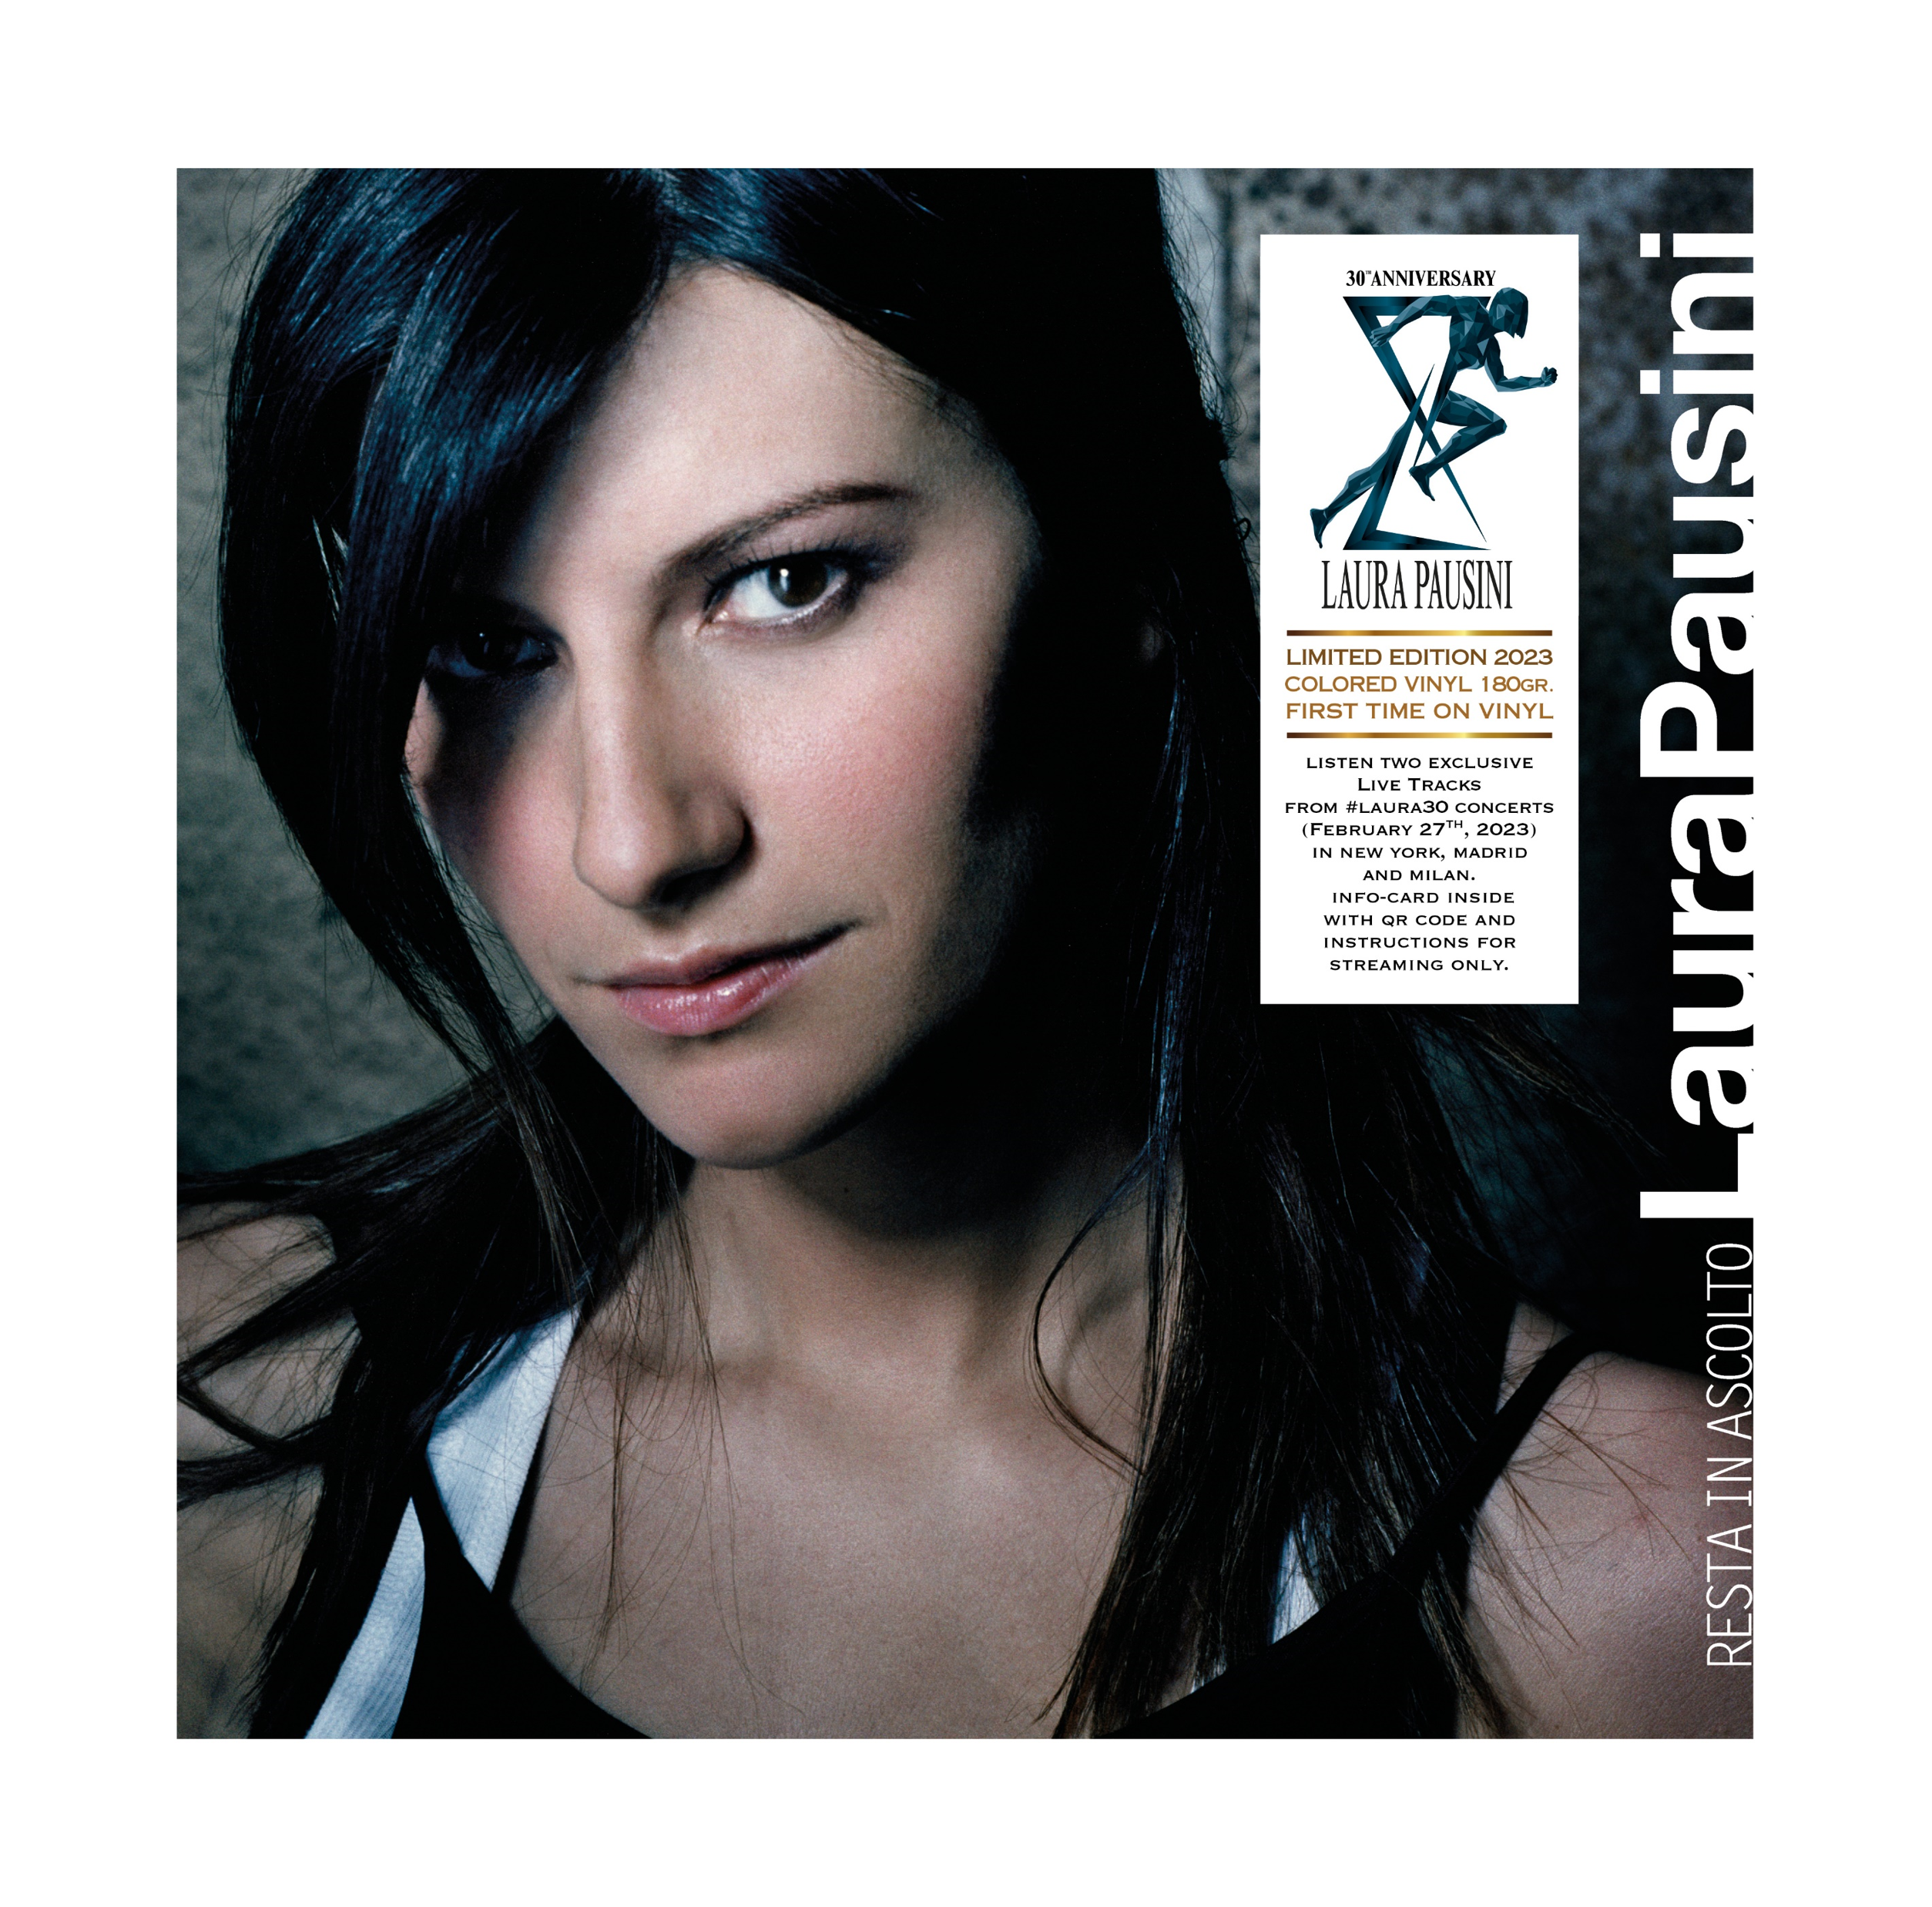 Laura Pausini Ristampe Vinili – Warner Music Italy Shop